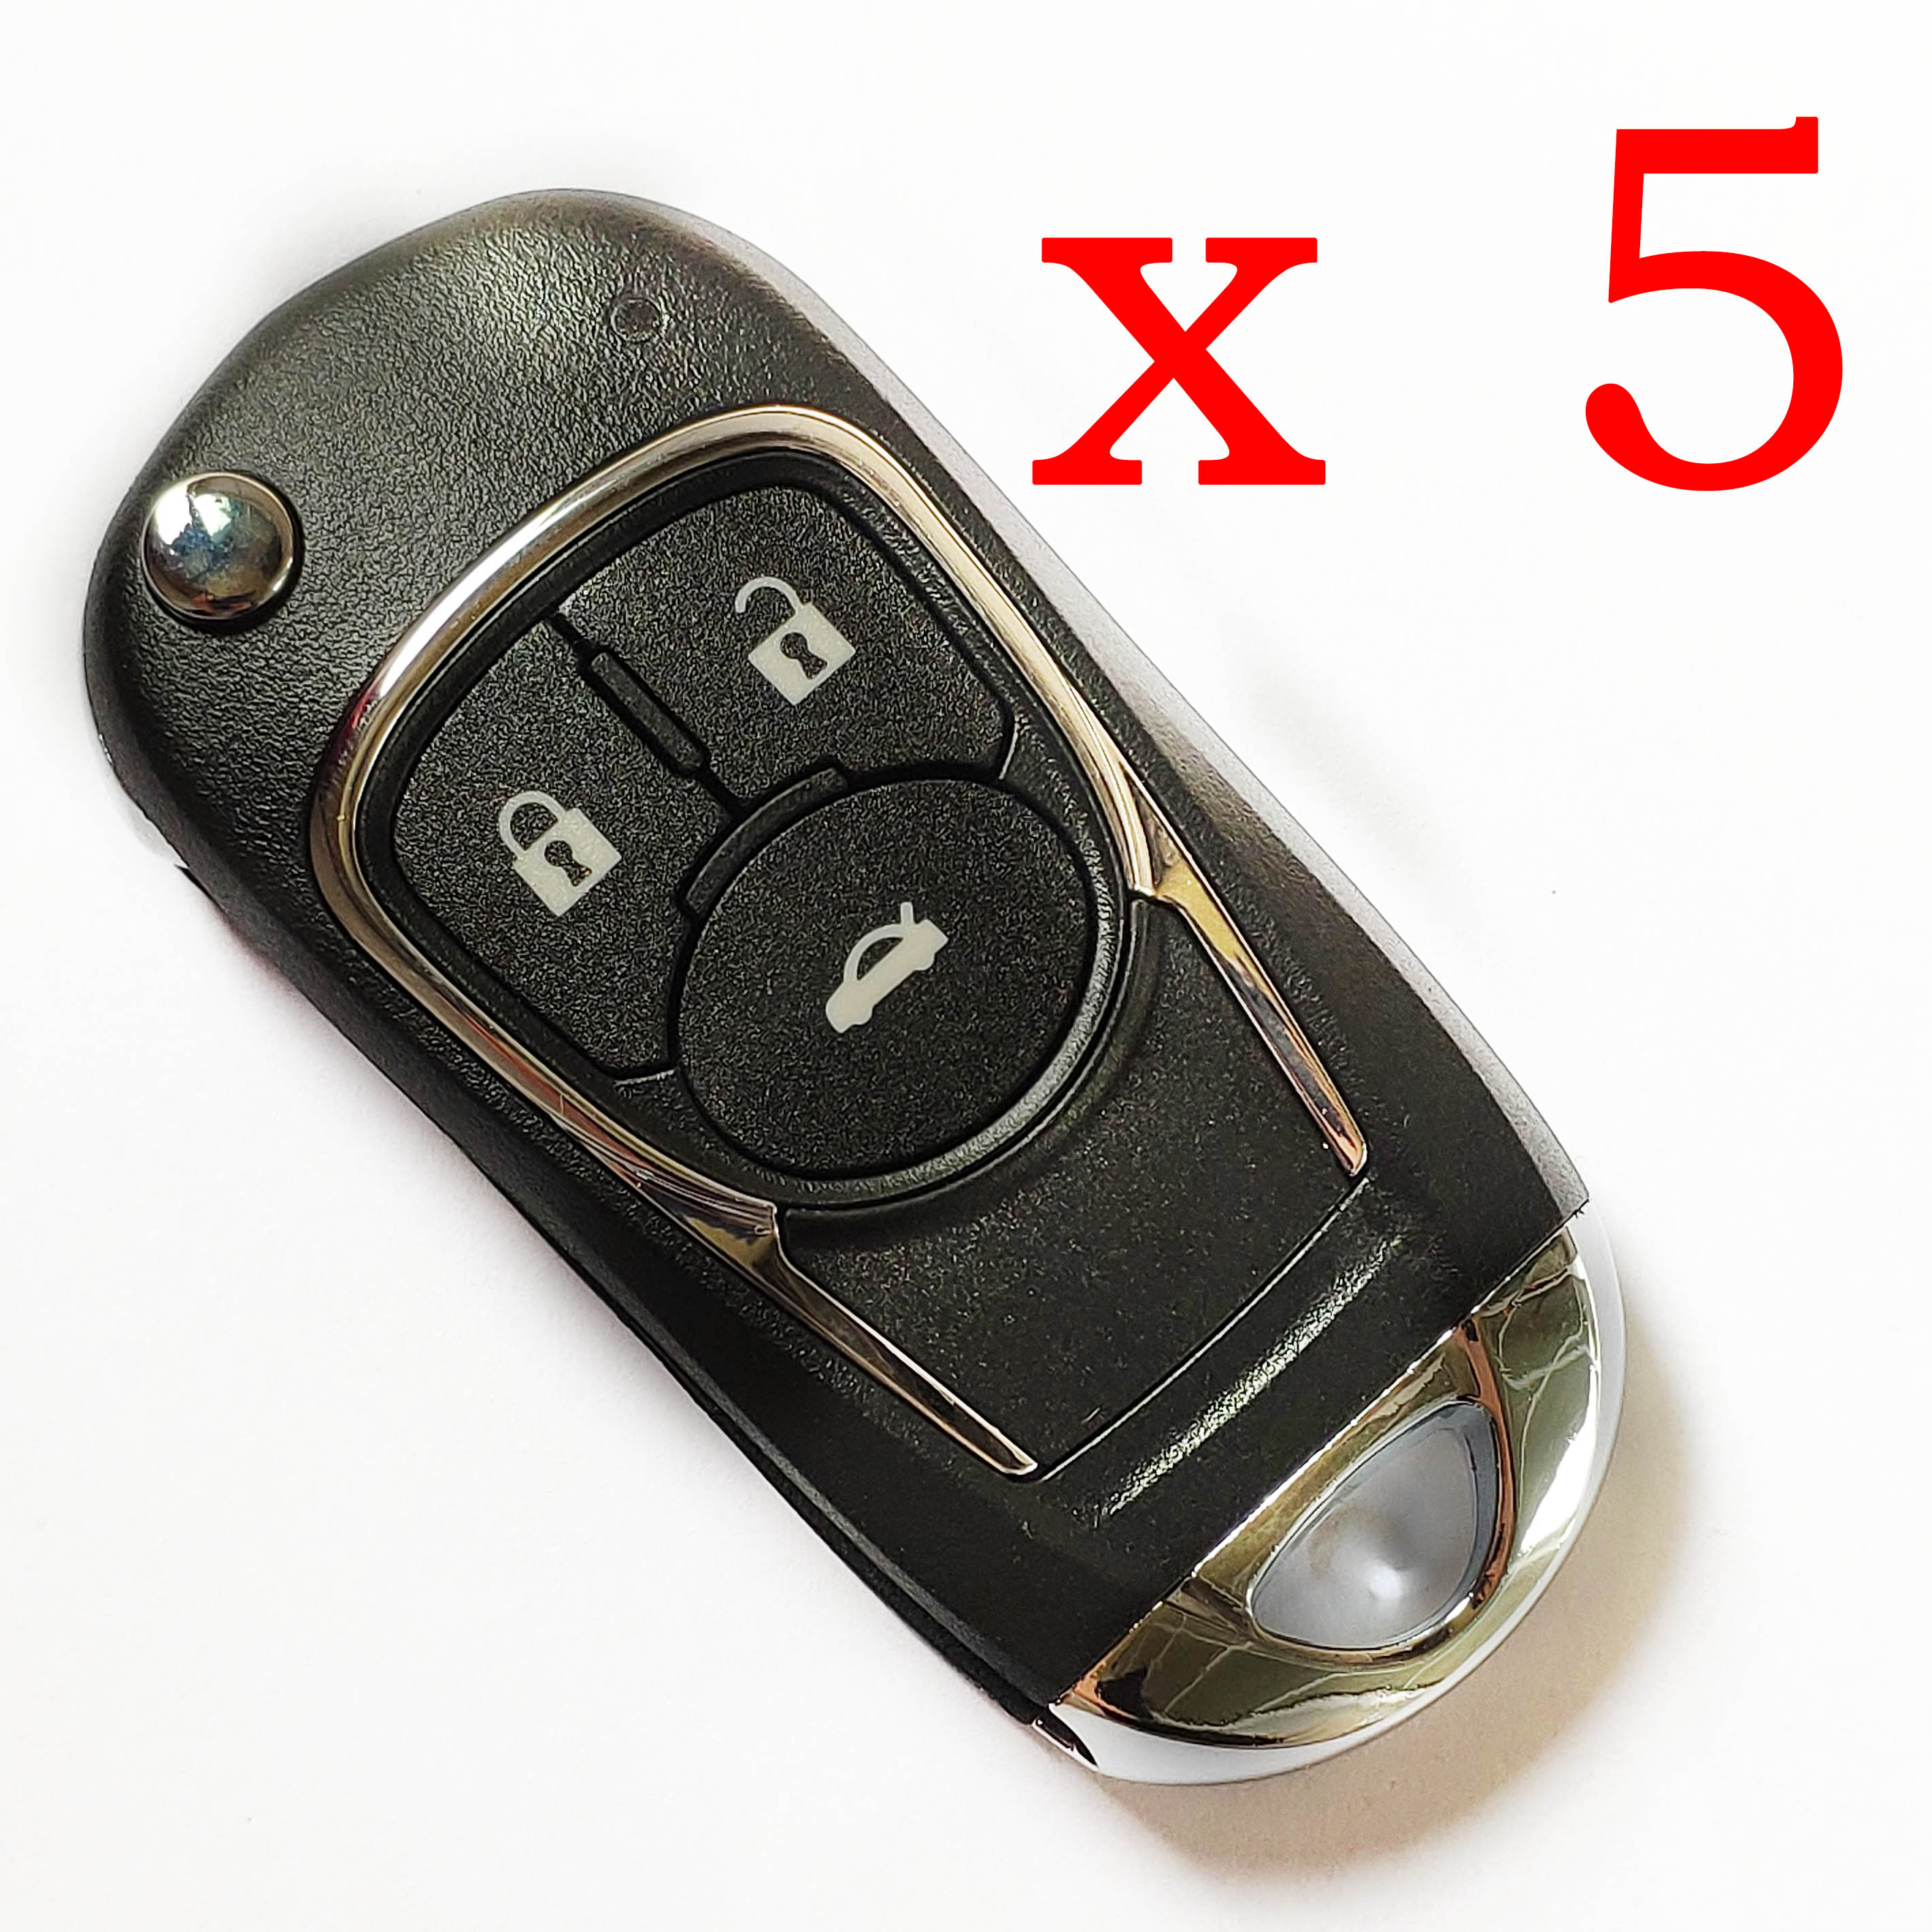 5 pieces Xhorse VVDI GM Universal Remote Control - XKBU03EN - with Blades & Logos